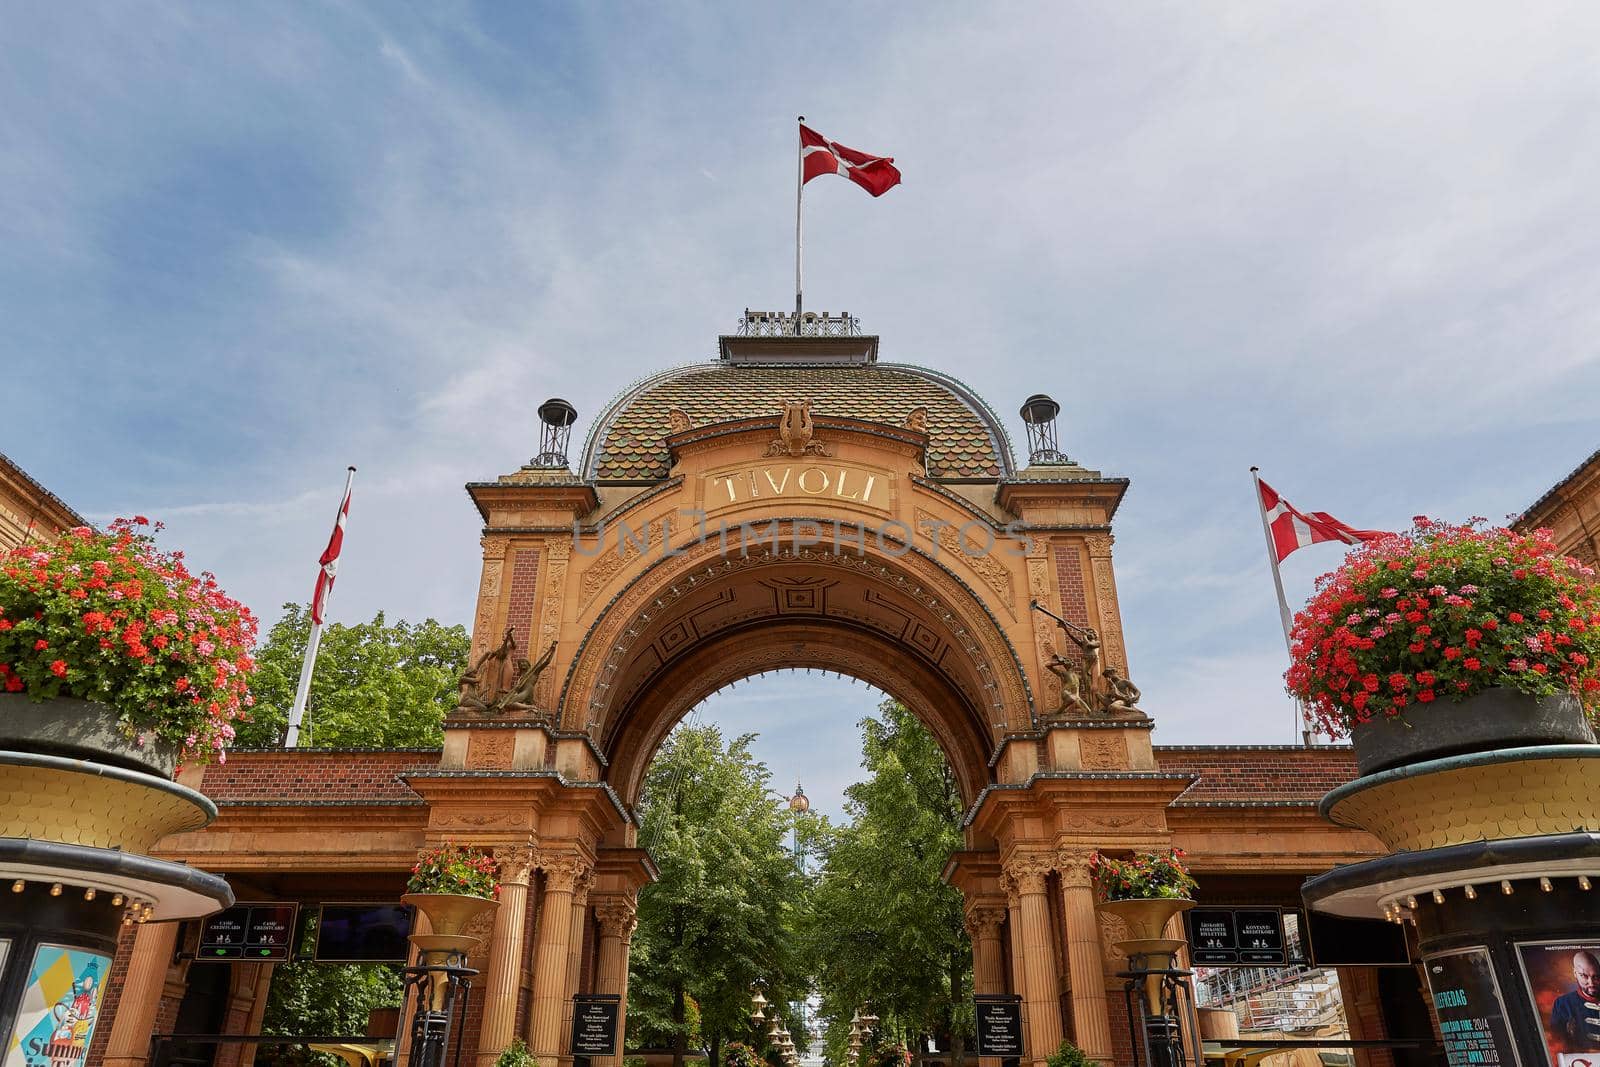 The main entrance gate into Tivoli amusement park in Copenhagen, Denmark by wondry